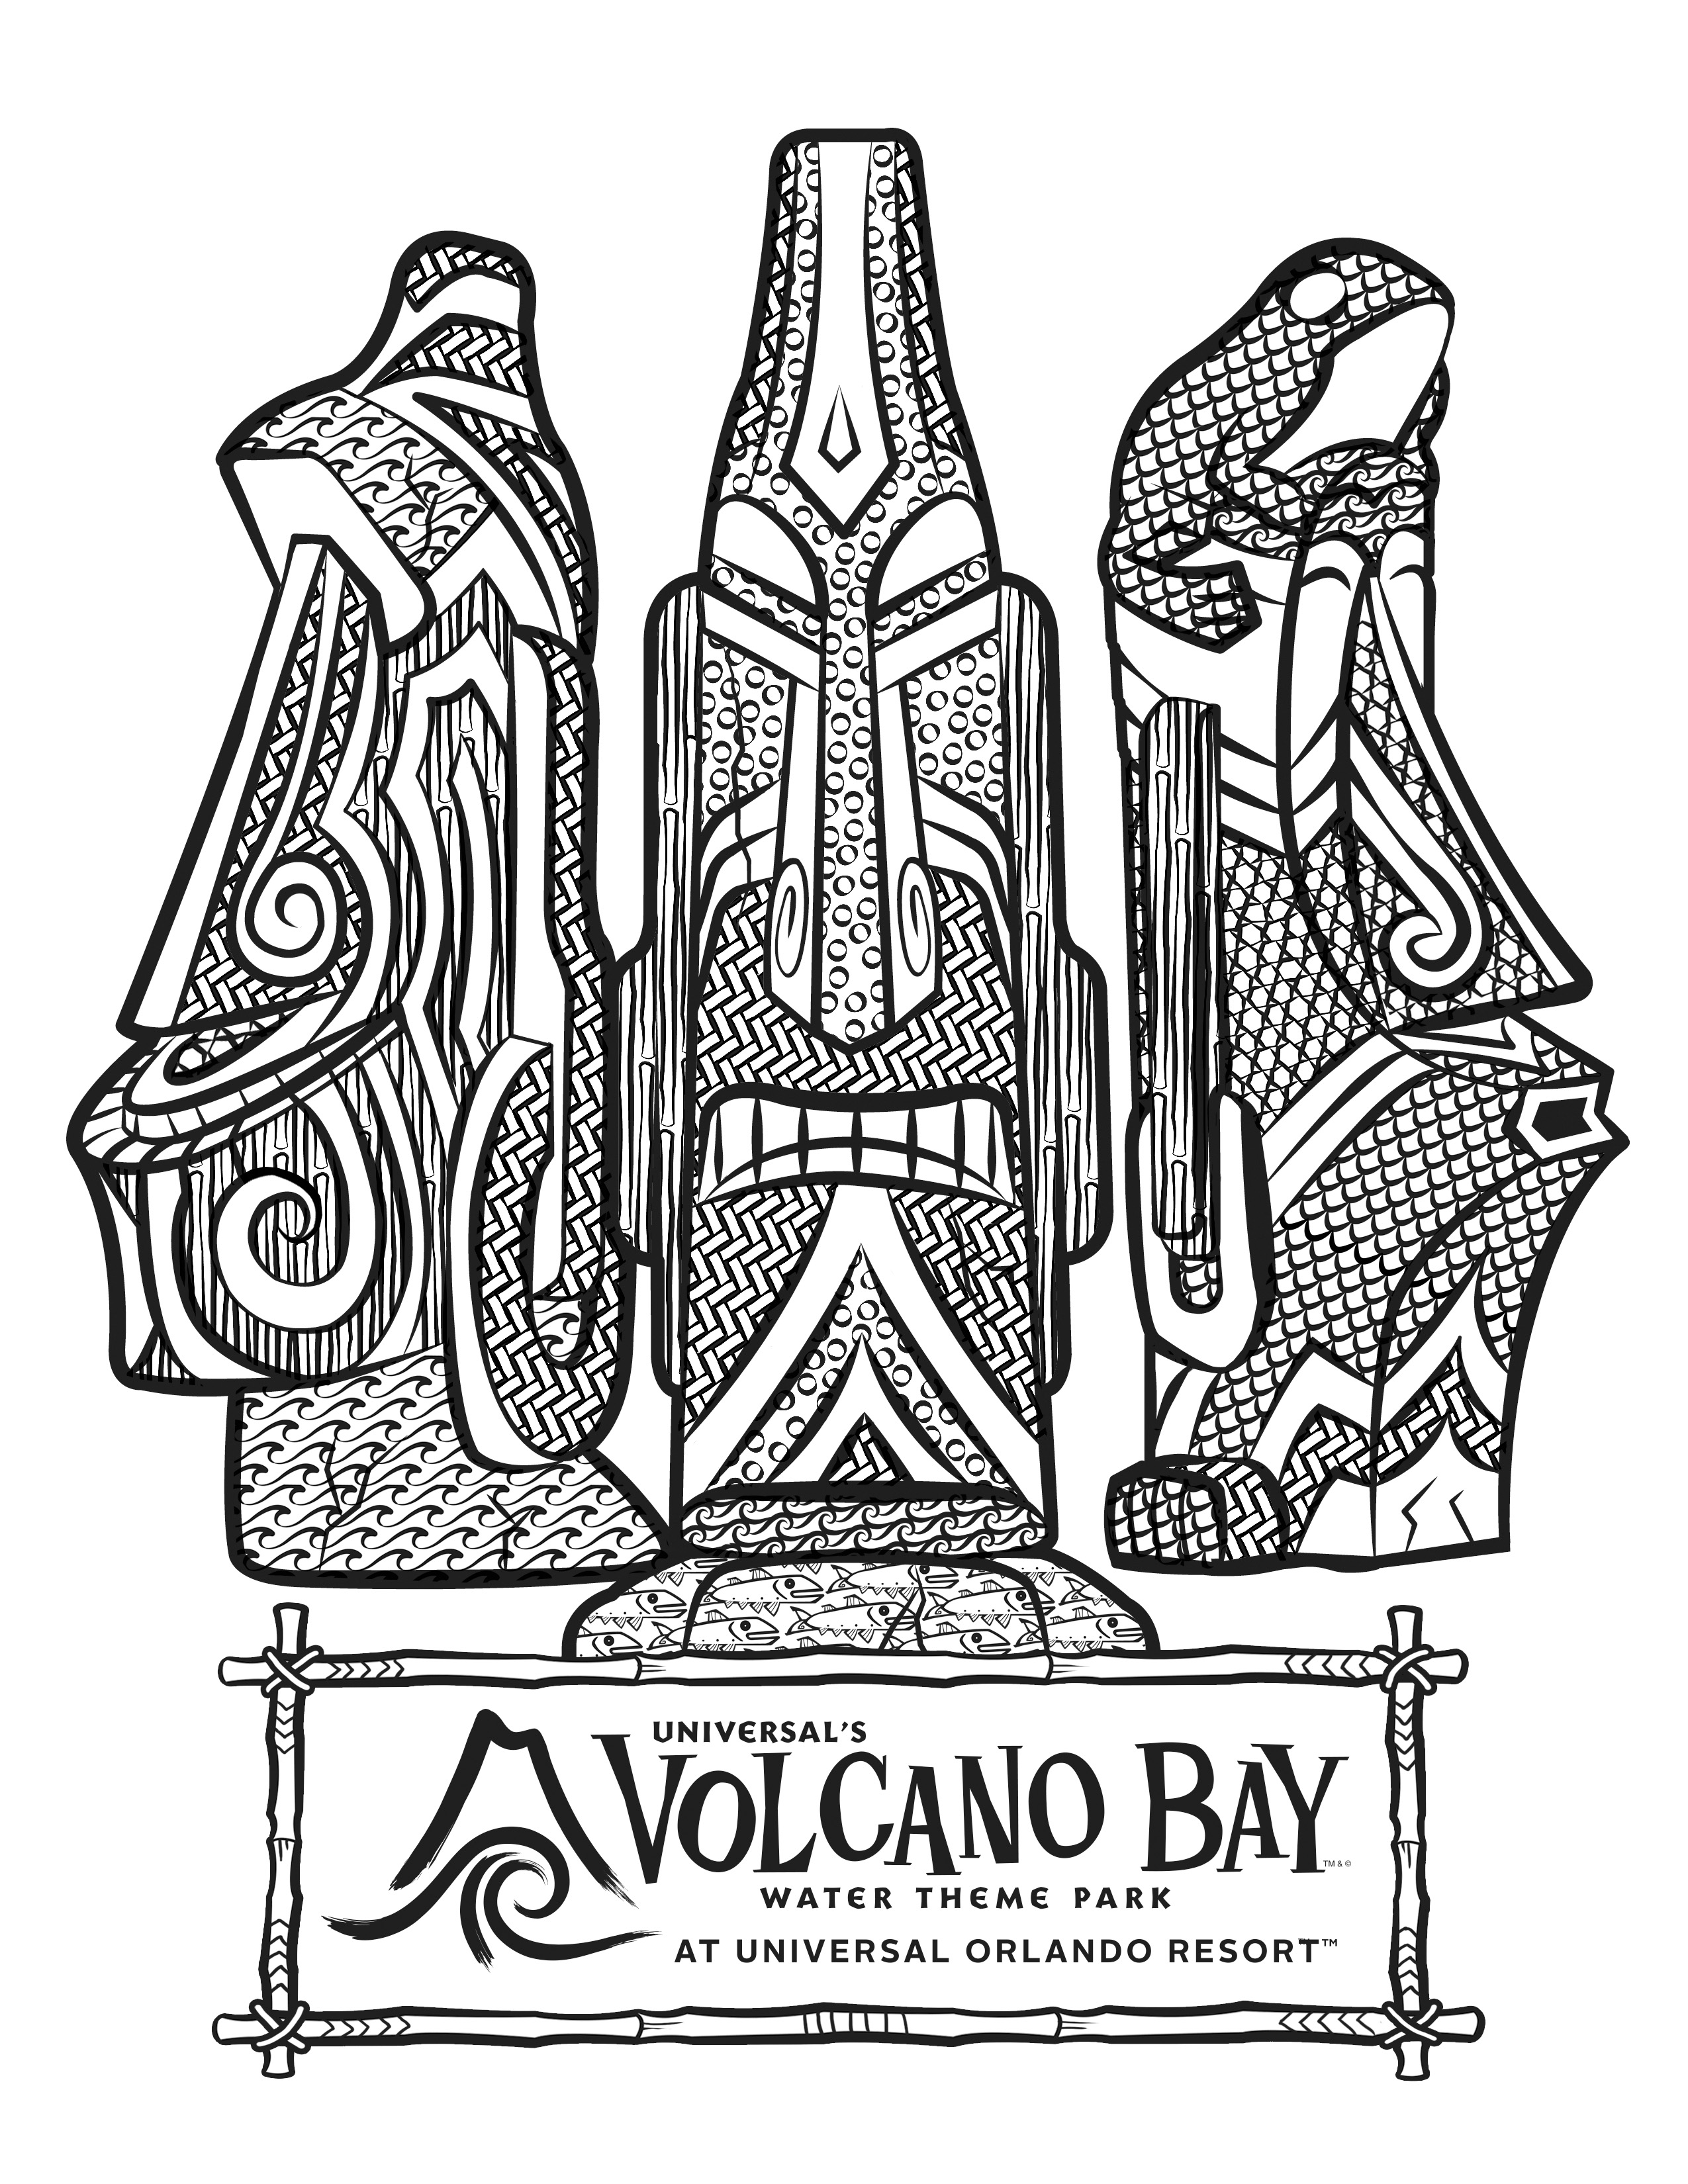 Universal's Volcano Bay Tikis Coloring Page